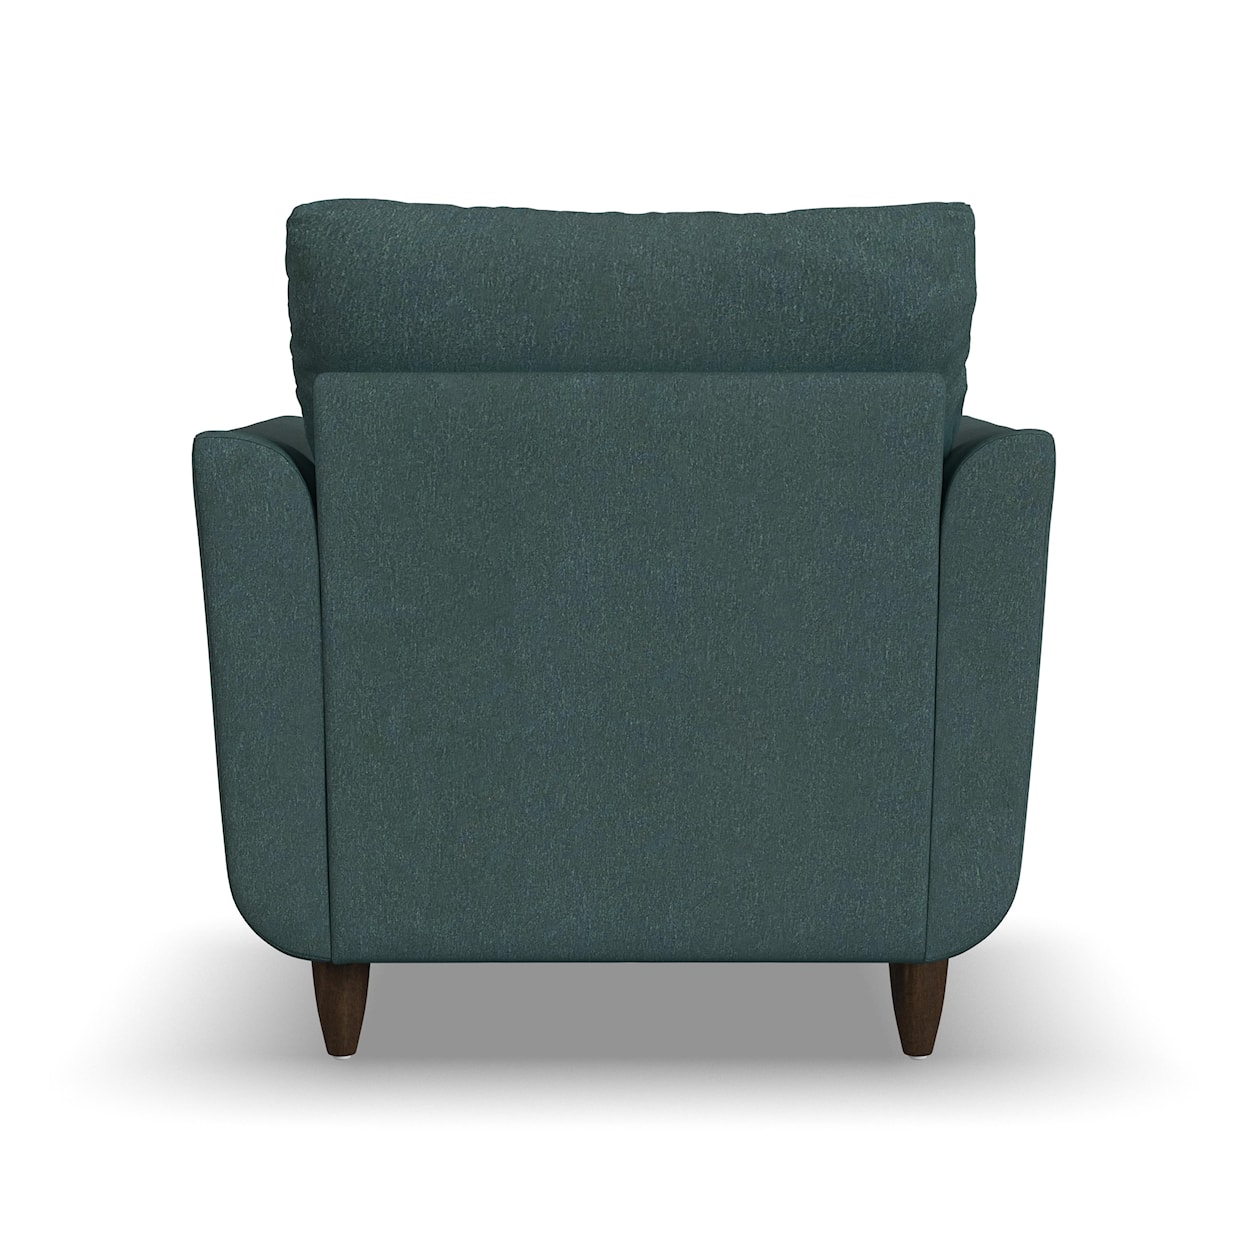 Flexsteel Charisma - Lewis Chair